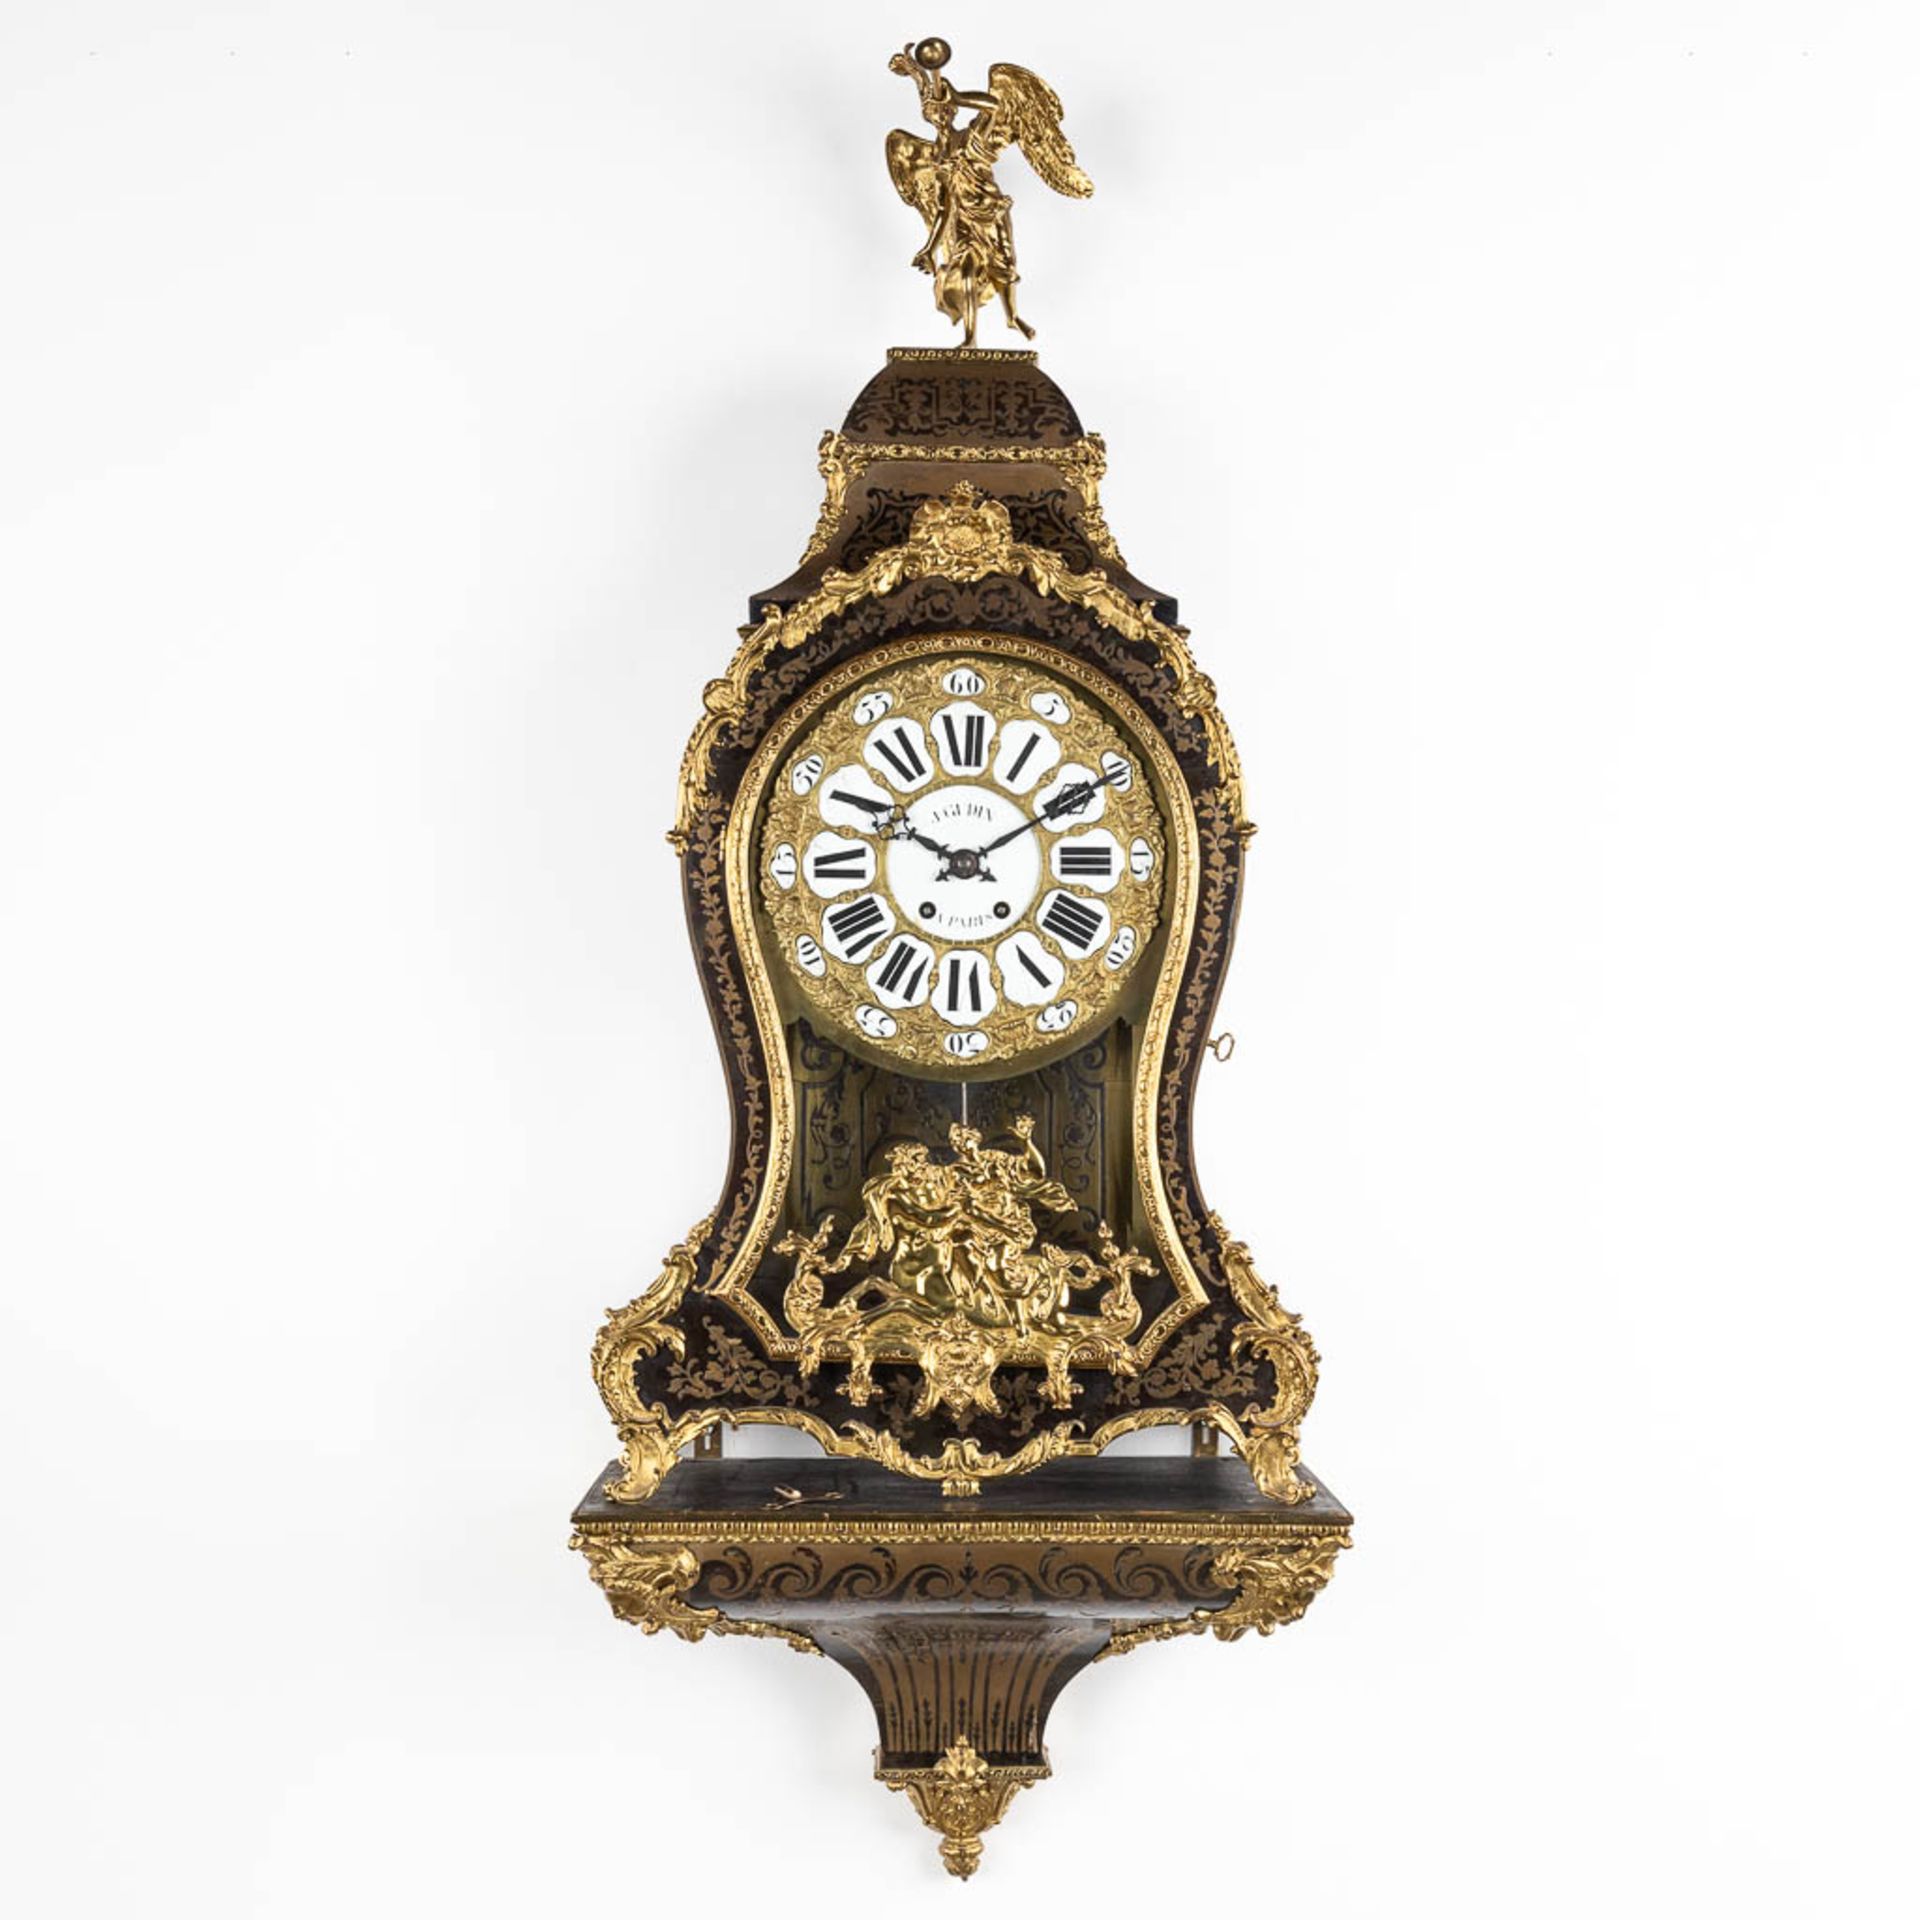 A large Cartel clock on a pedestal, Boulle Inlay, signed Gudin à Paris. 19th C. (D:24 x W:56 x H:145